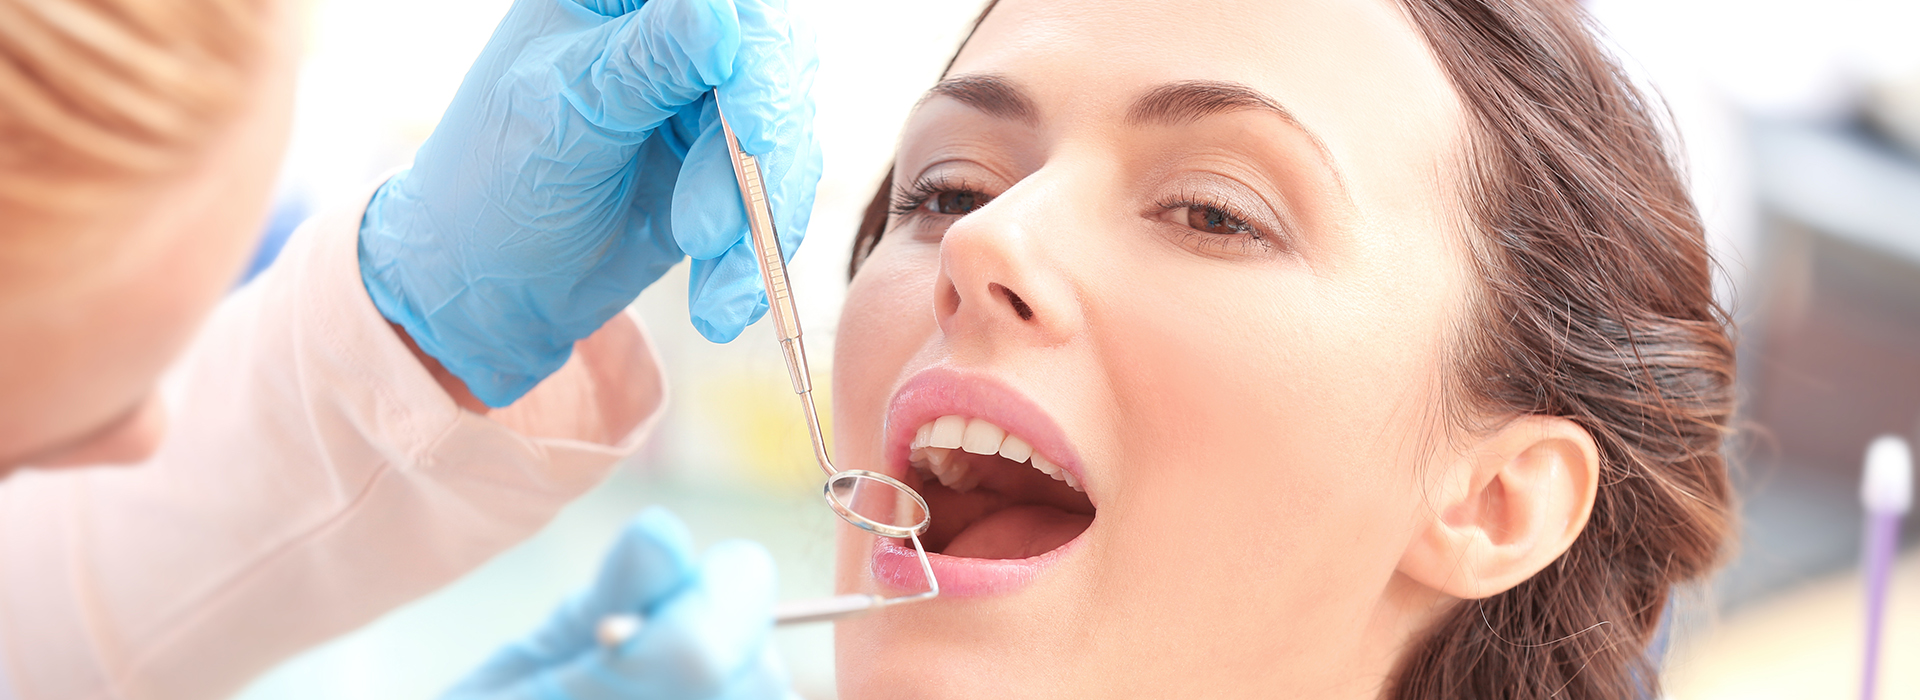 Bright Smile Dental Care, LTD | Dermal Fillers, TMJ Disorders and Cosmetic Dentistry